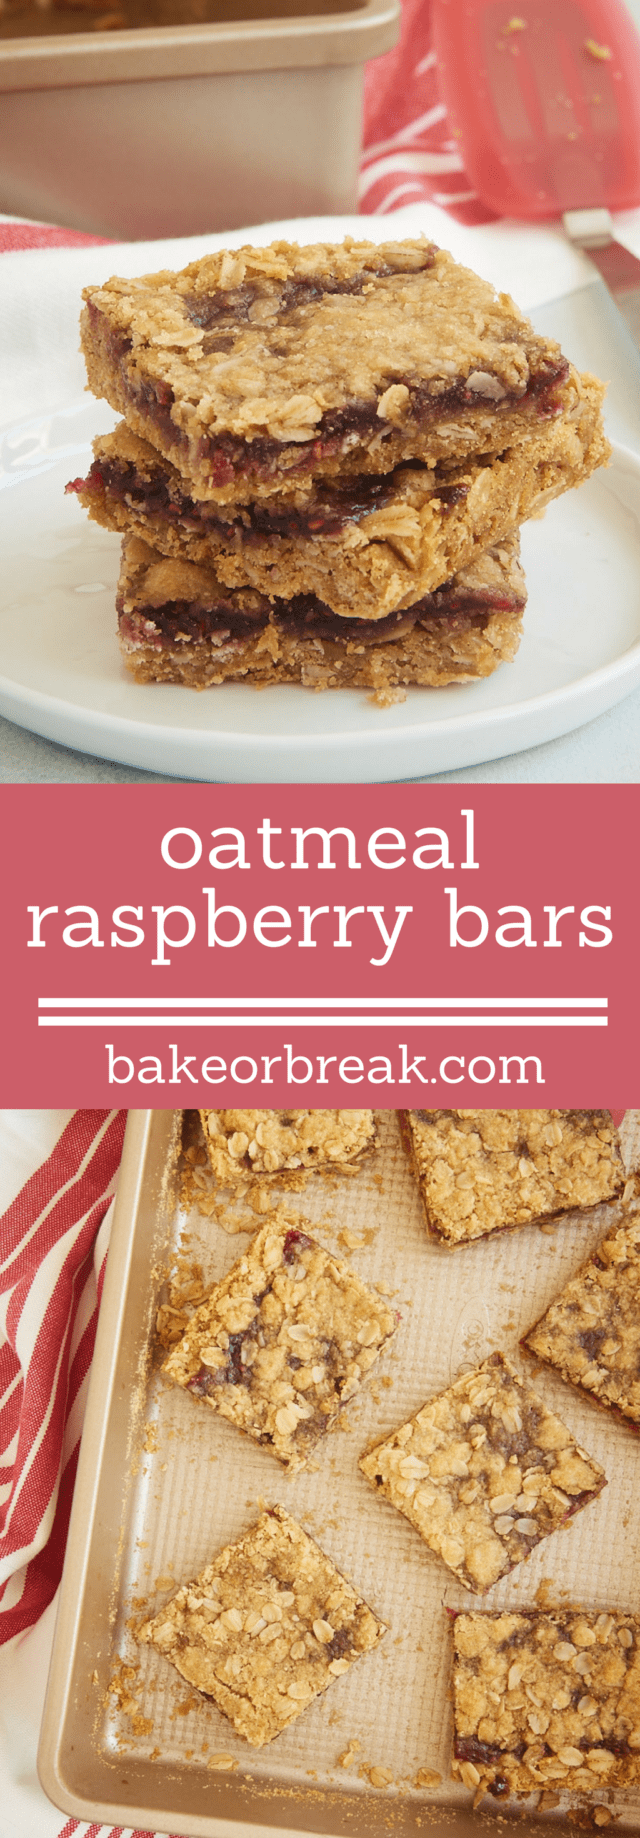 Oatmeal raspberry bars packed with raspberry jam.